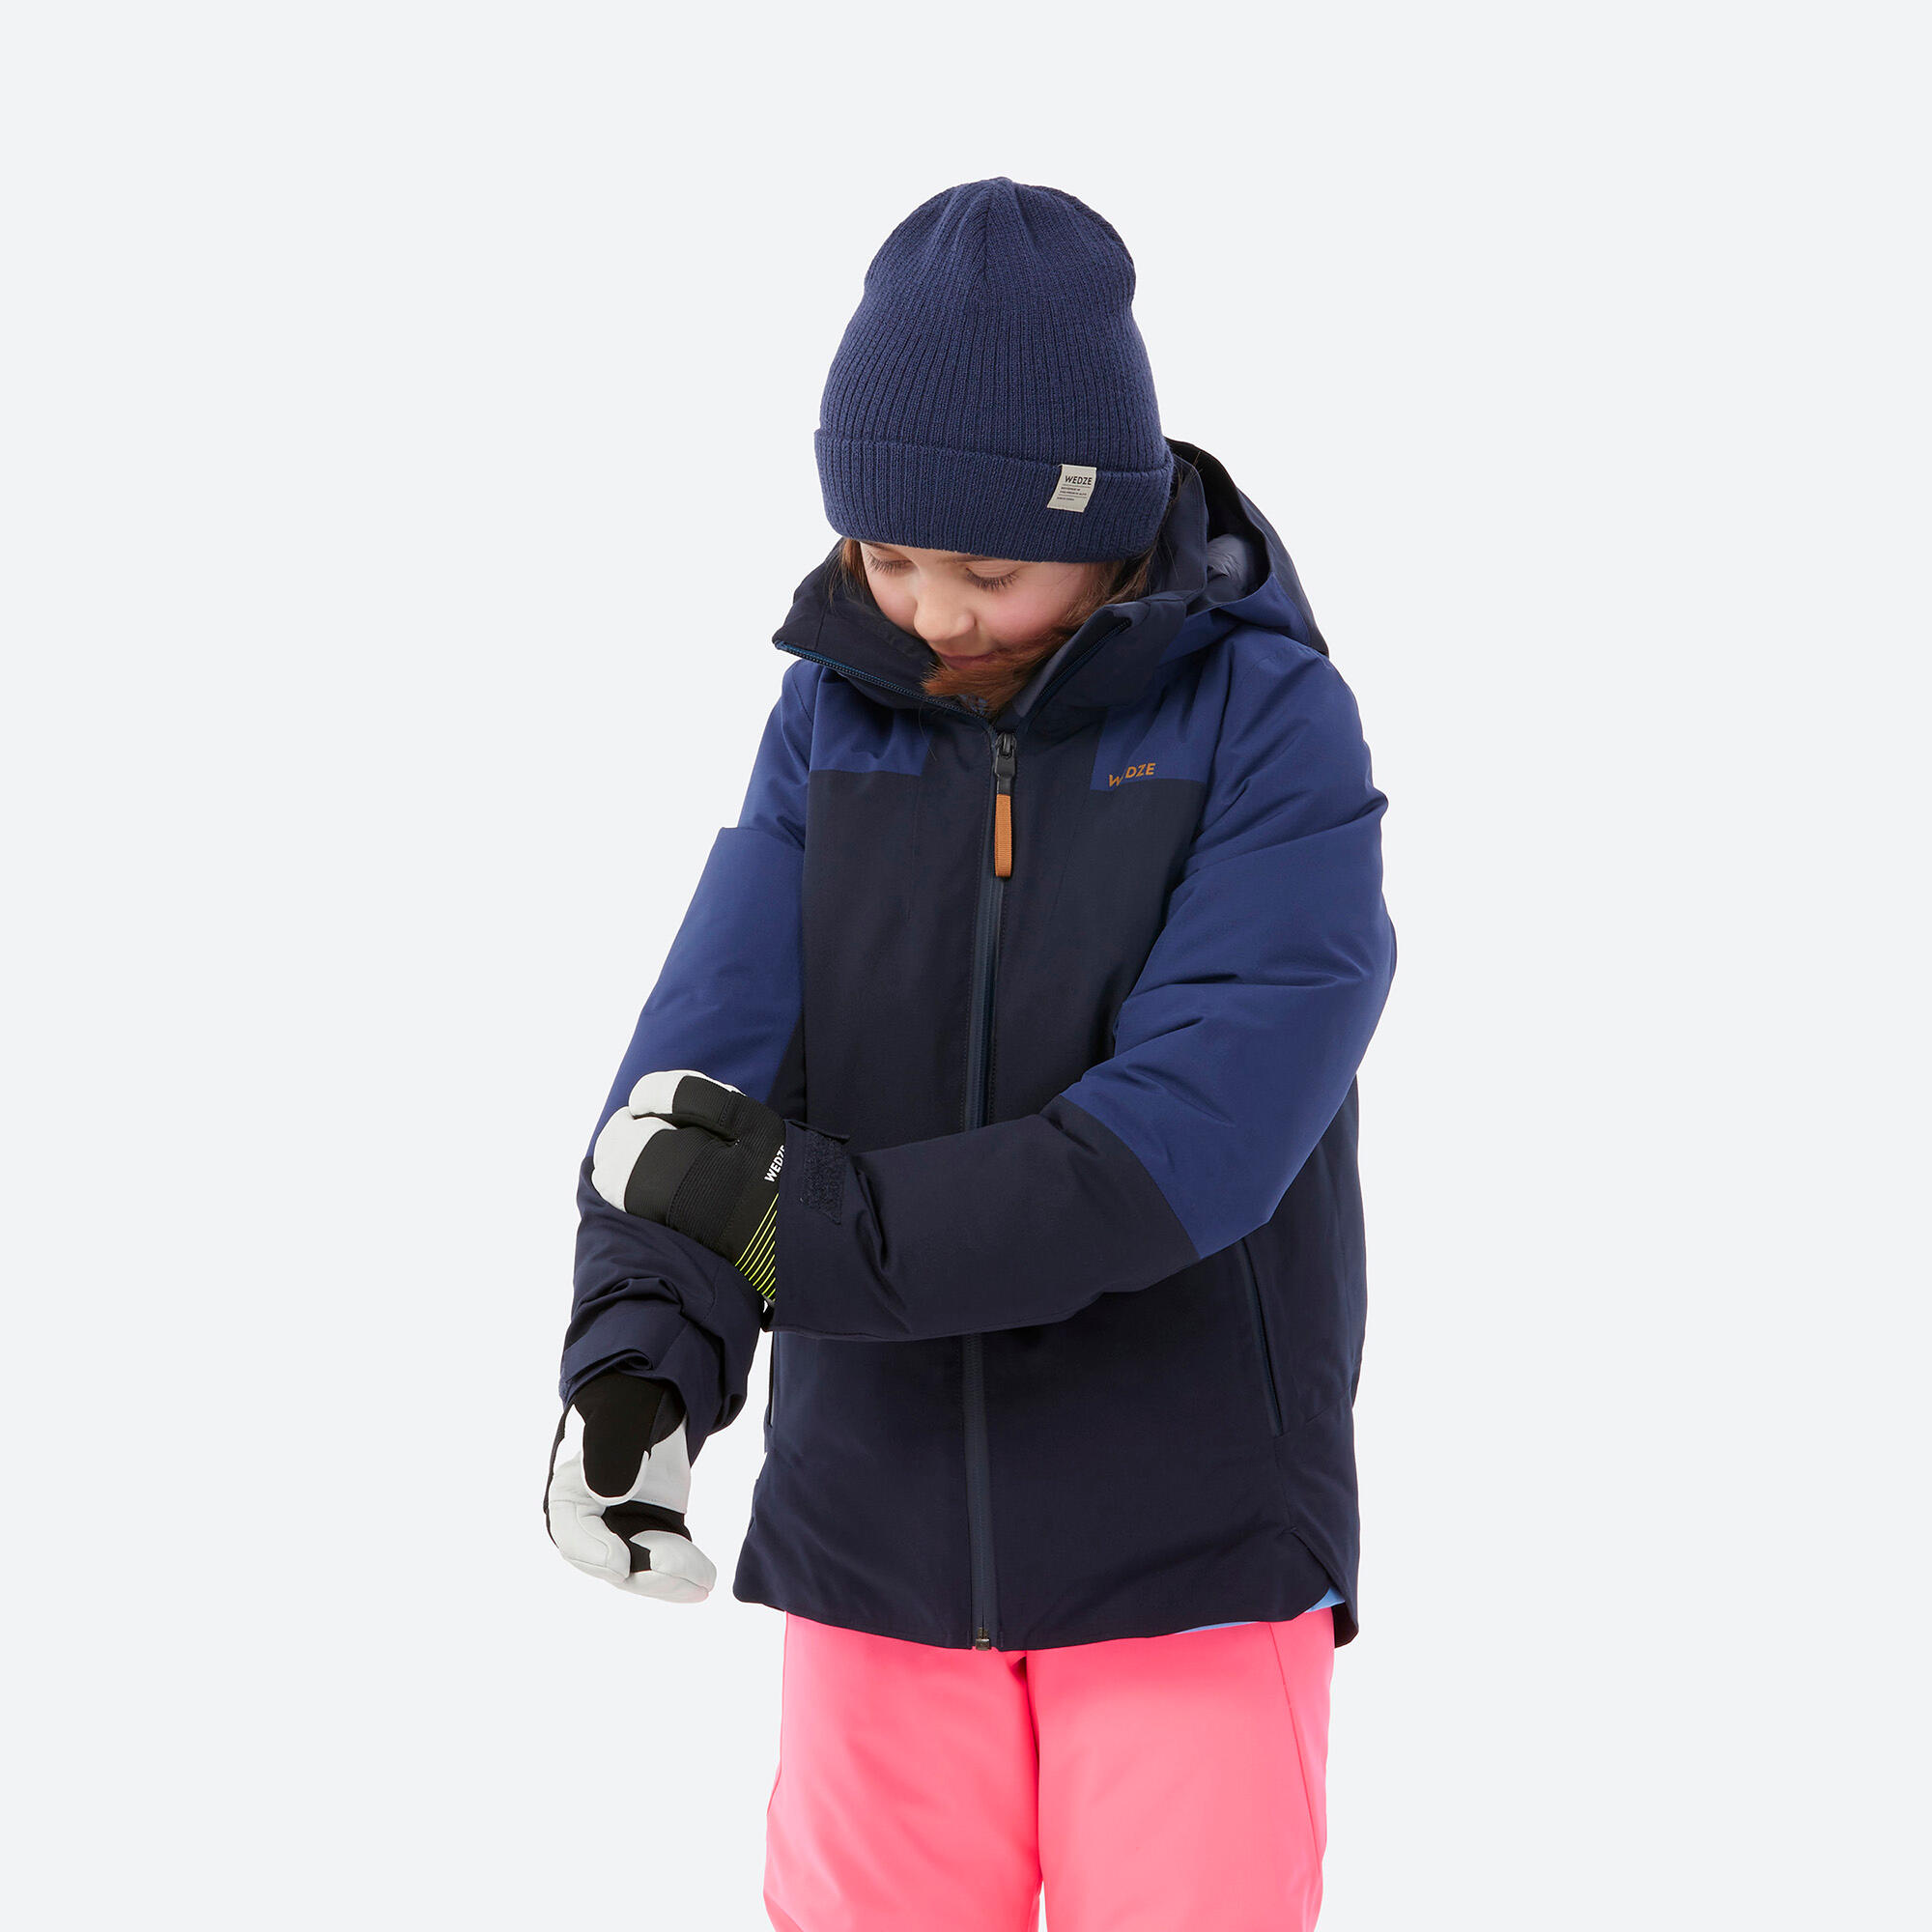 Kids’ warm and waterproof ski jacket 900 - blue 4/13